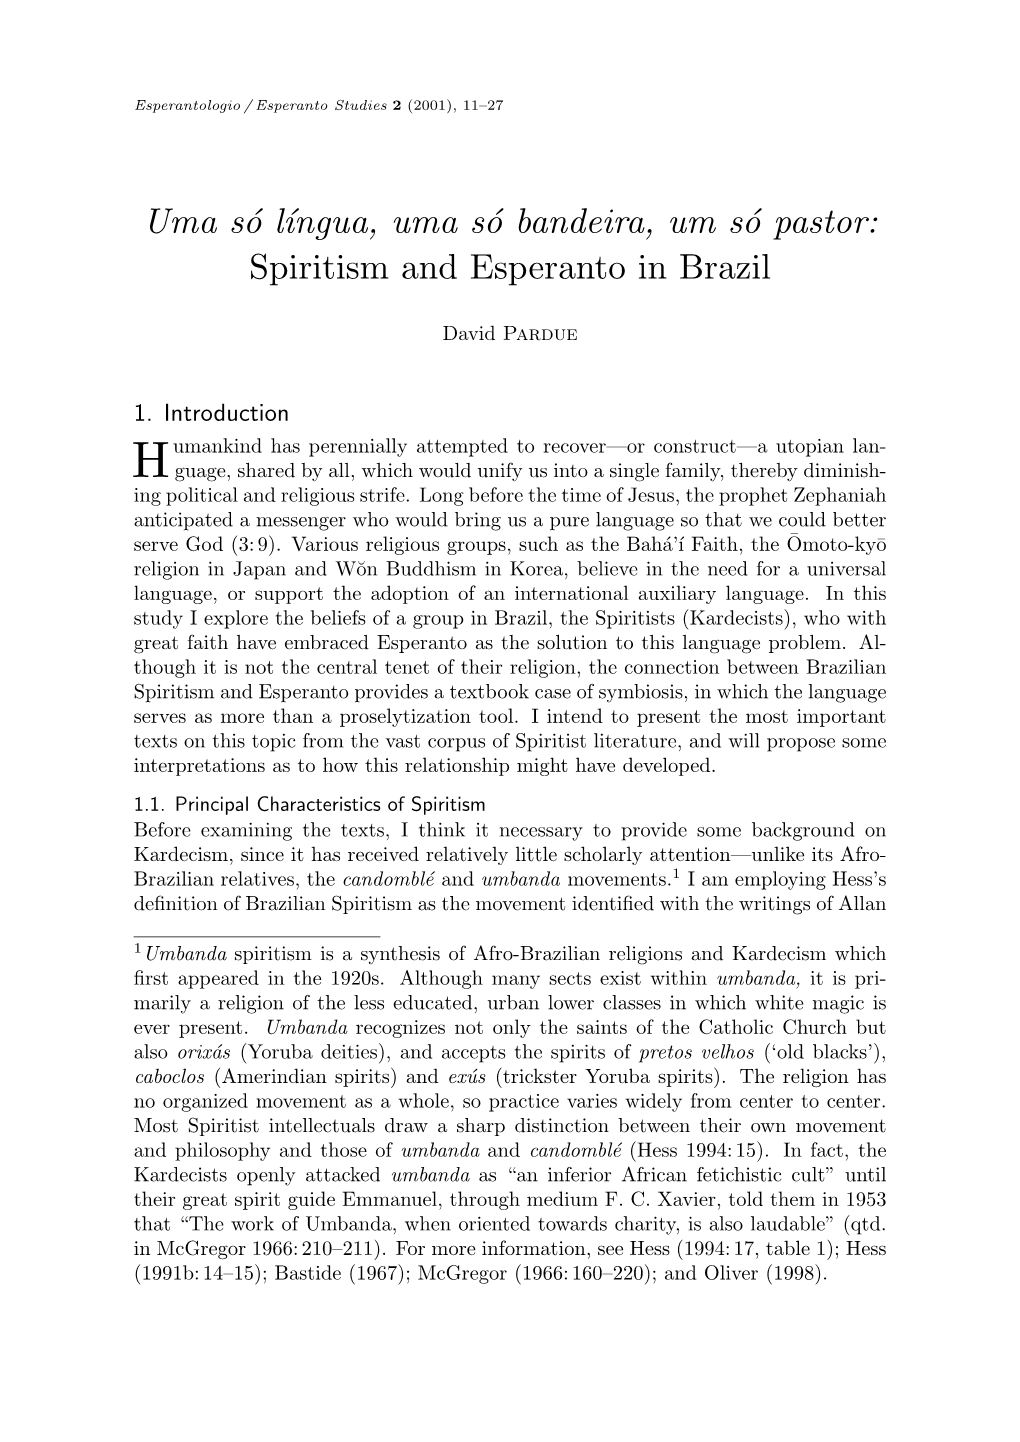 Spiritism and Esperanto in Brazil